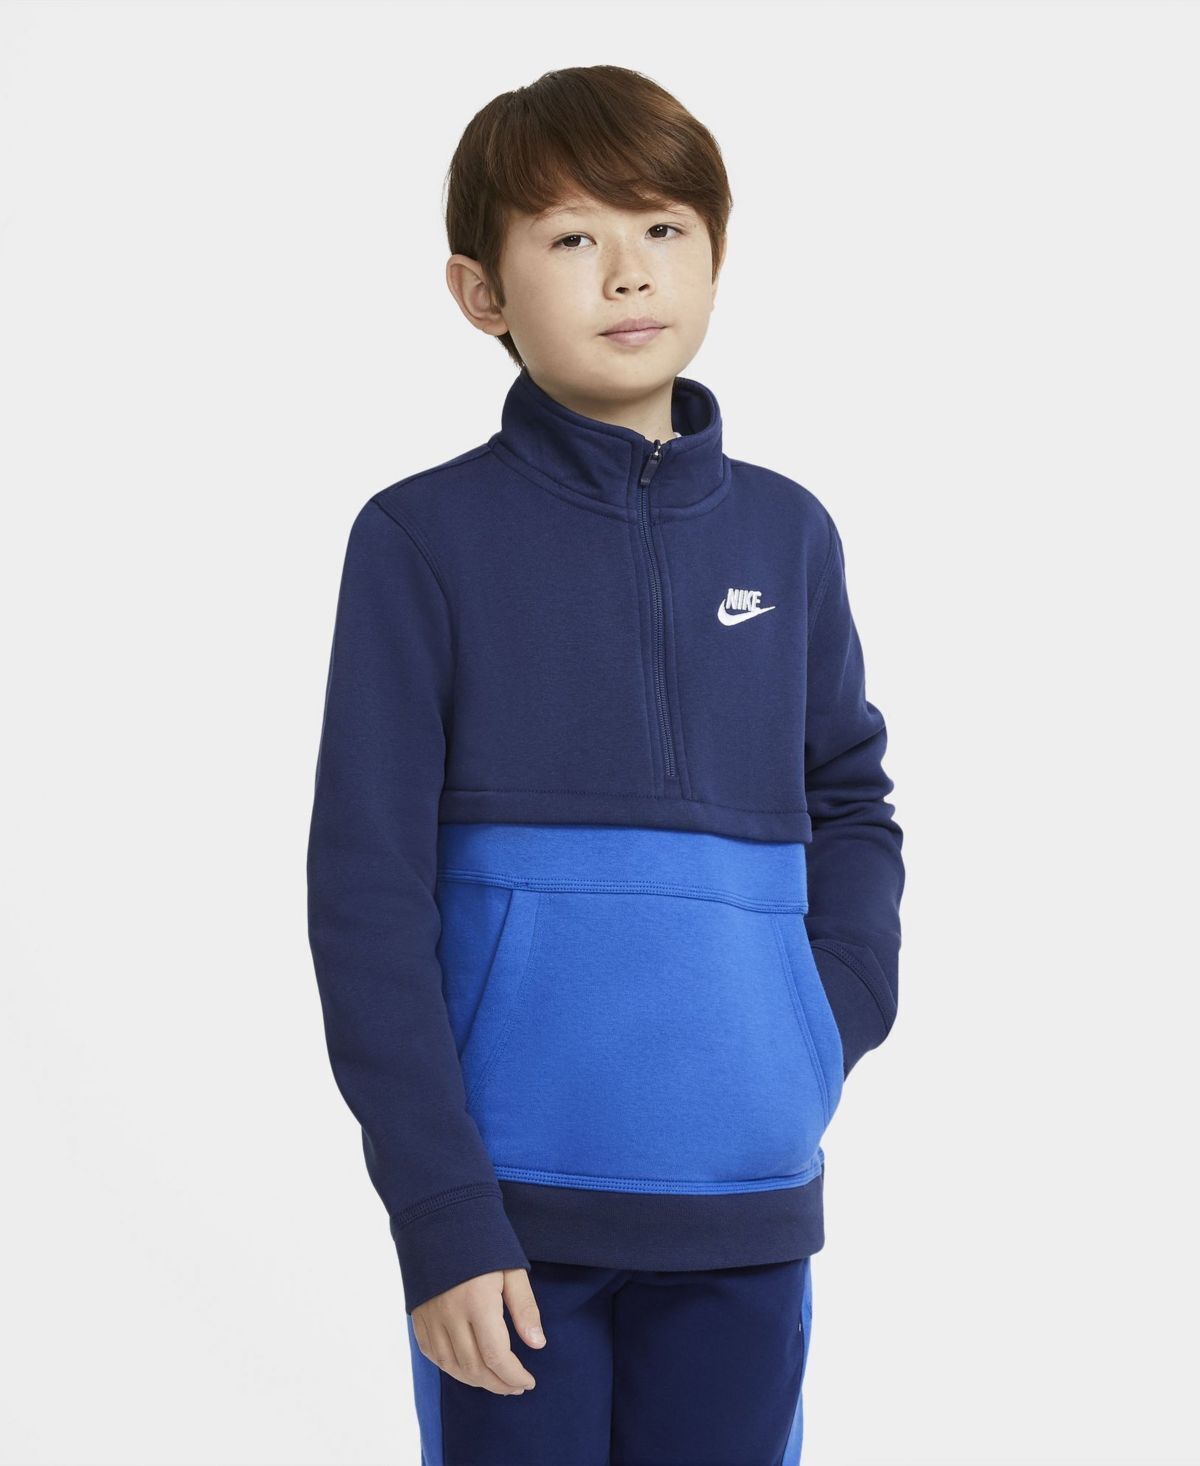 Primary image for Nike Big Boys Sports Club Half Zip Fleece Sweatshirt,Midnight Navy/Game,Large